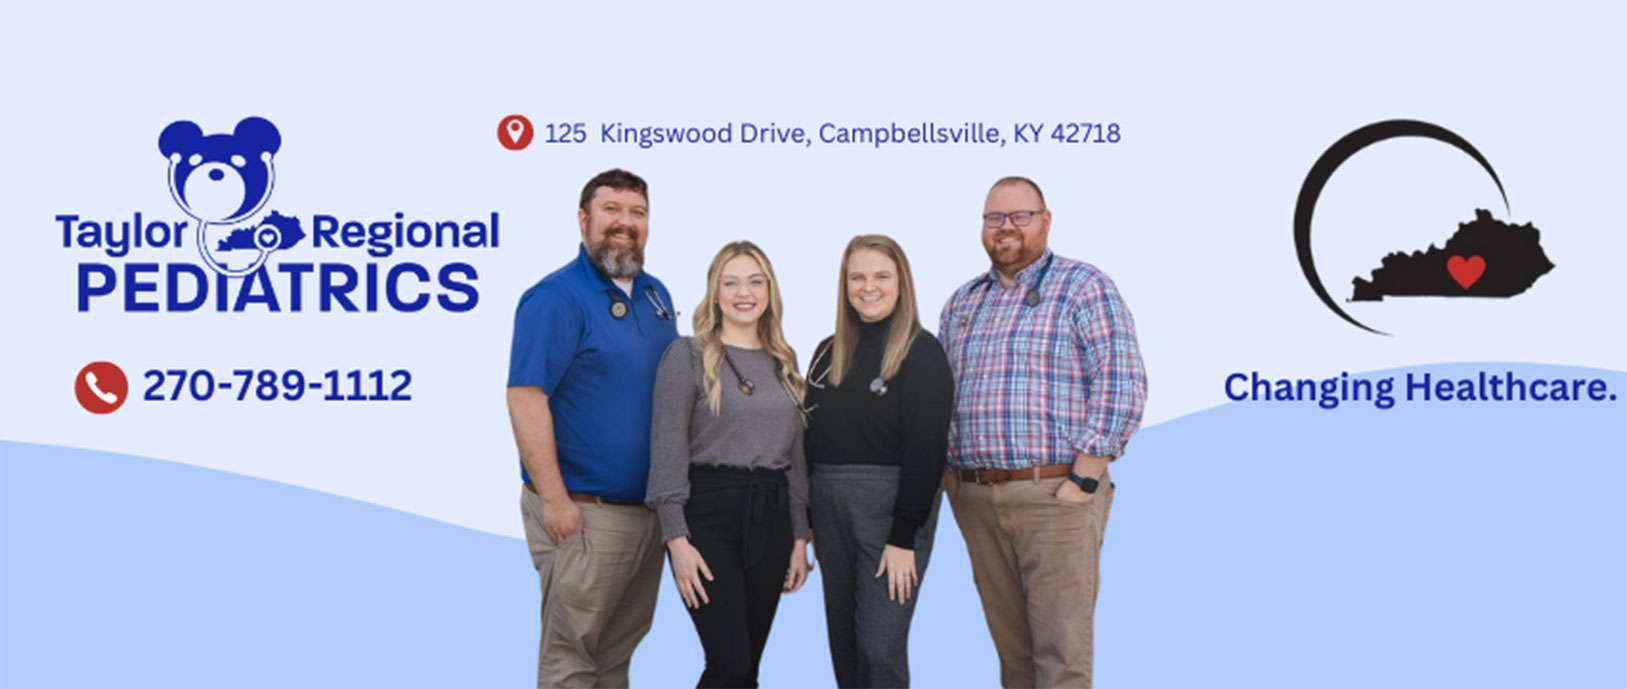 Taylor Regional Pediatrics
Changing Healthcare
270-789-1112

125 Kingswood Drive
Campbellsville, Kentucky 42718